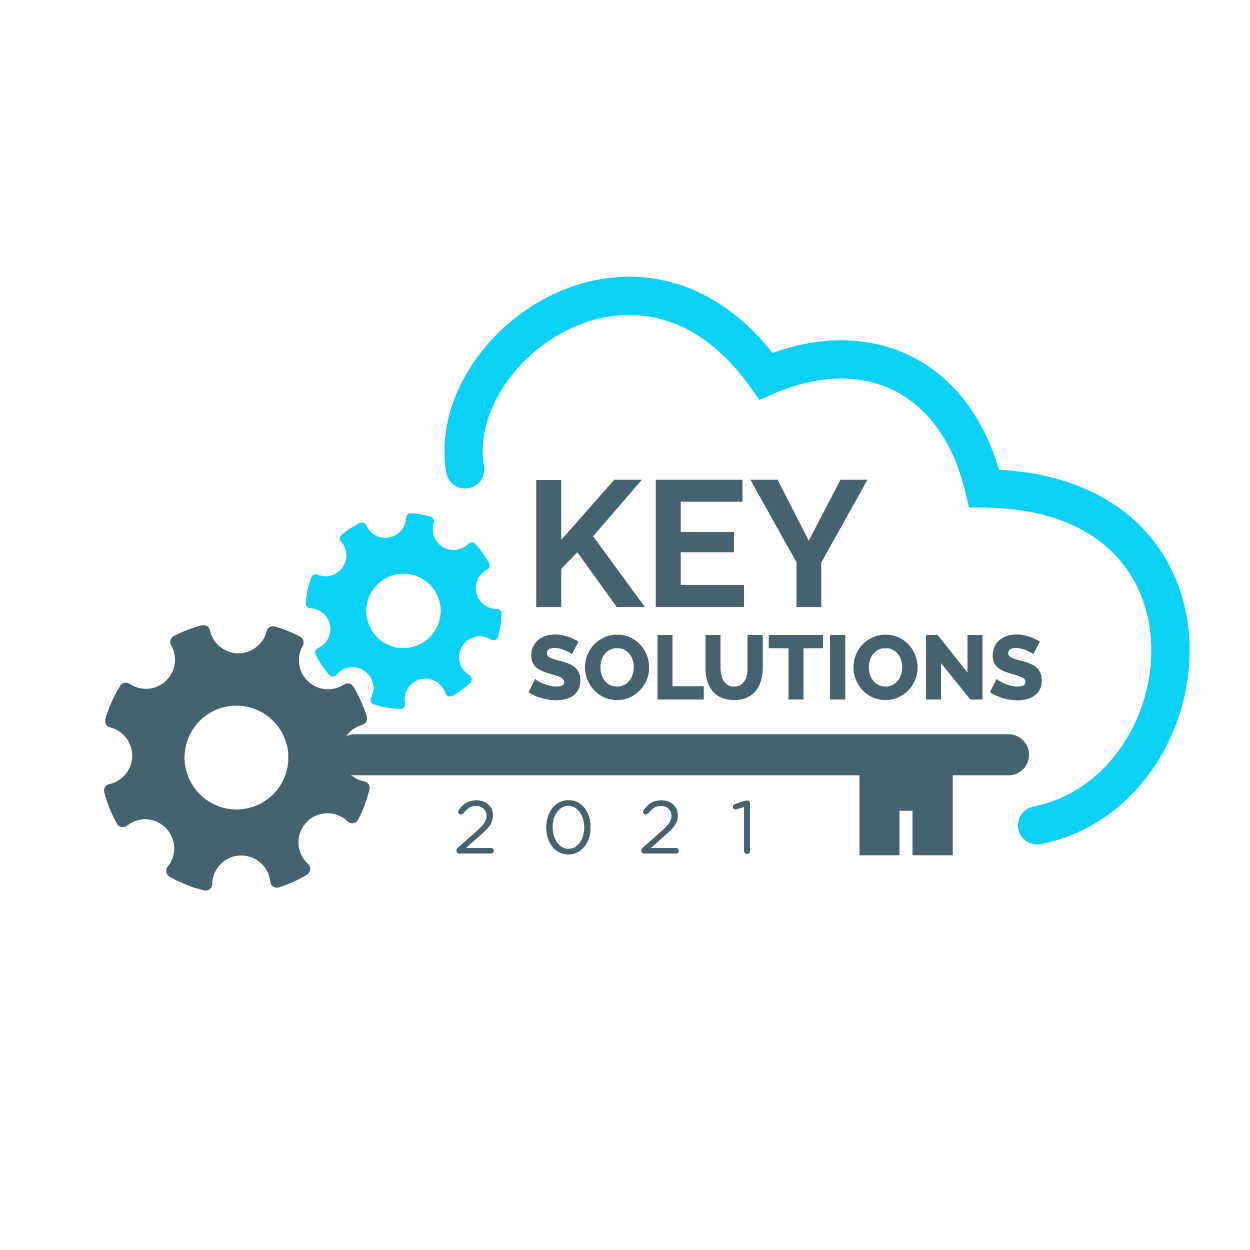 Sage 300 Virtual Key Solutions Summit Reunites Ecosystem